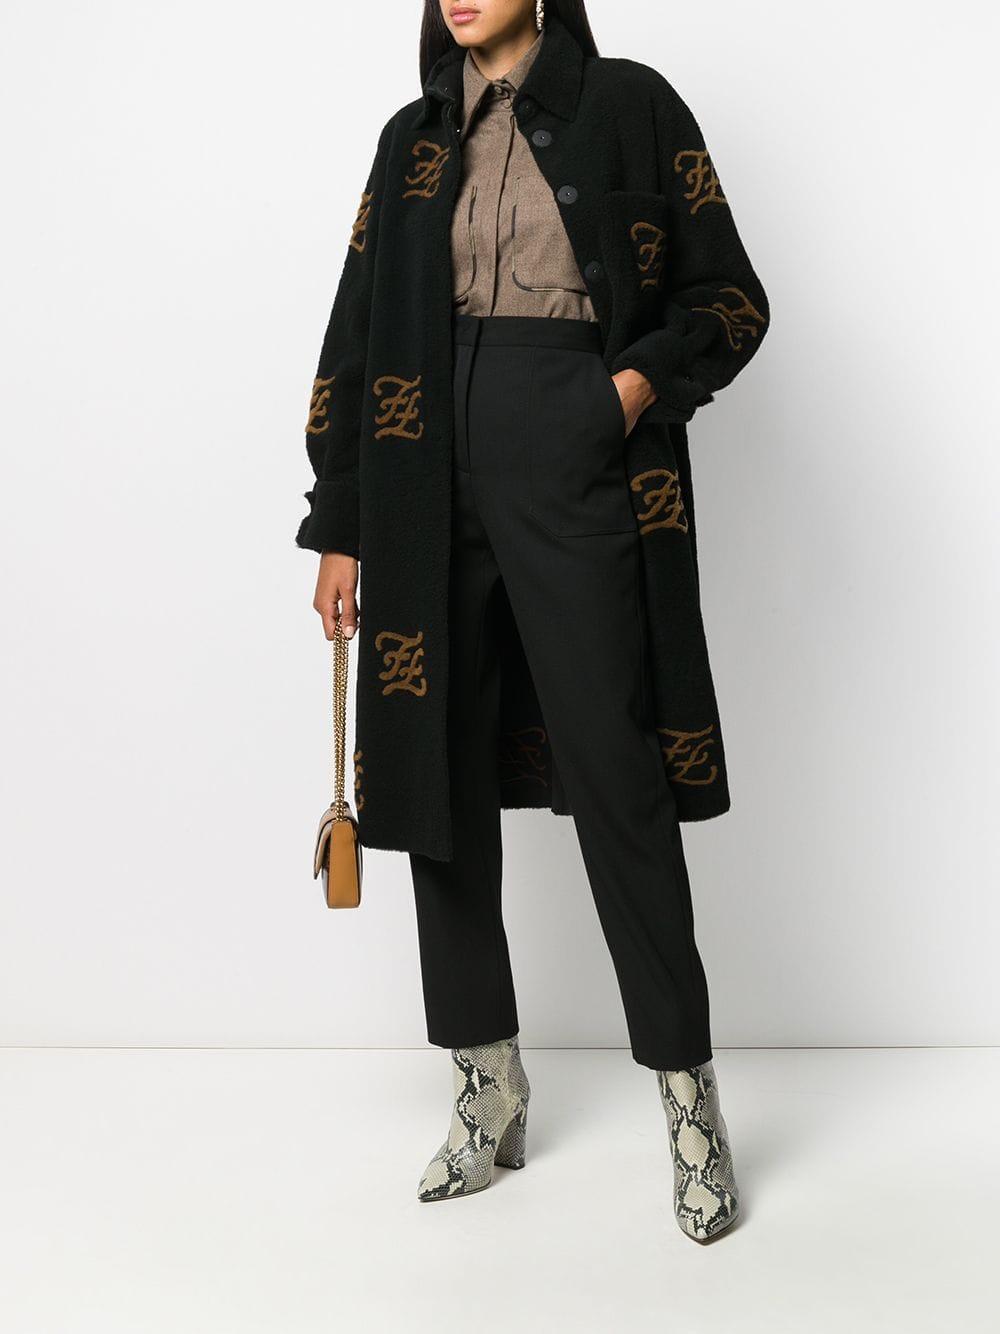 ff motif shearling jacket